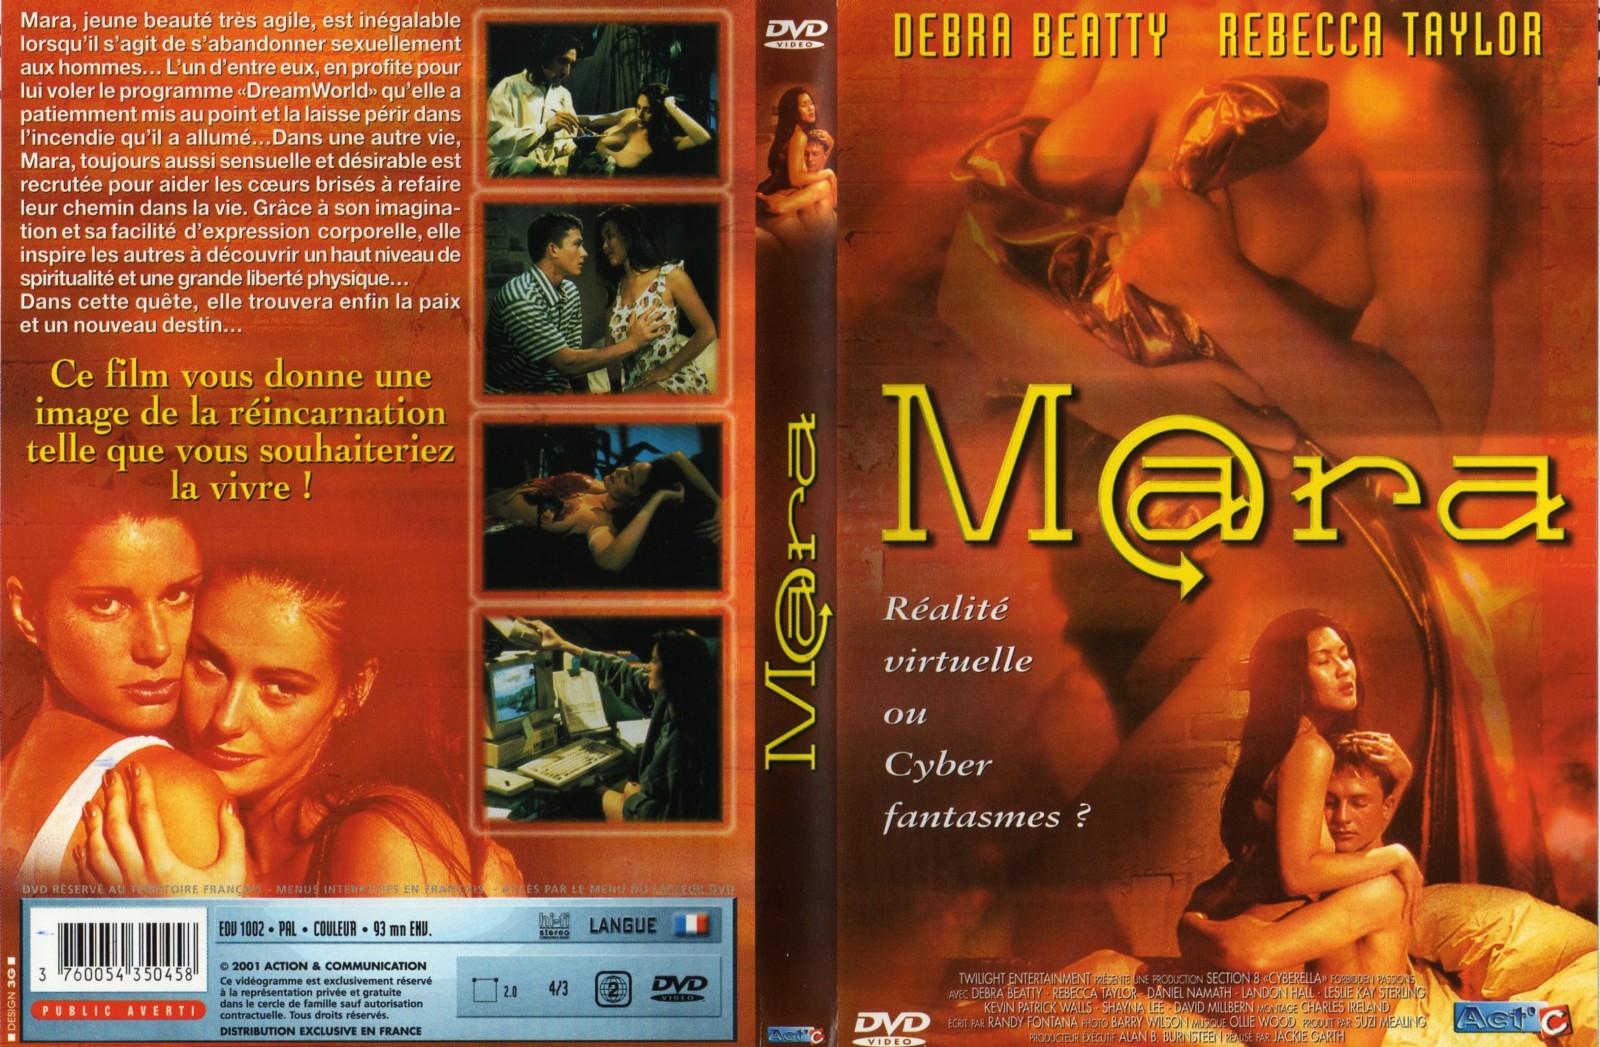 Jaquette DVD Mara